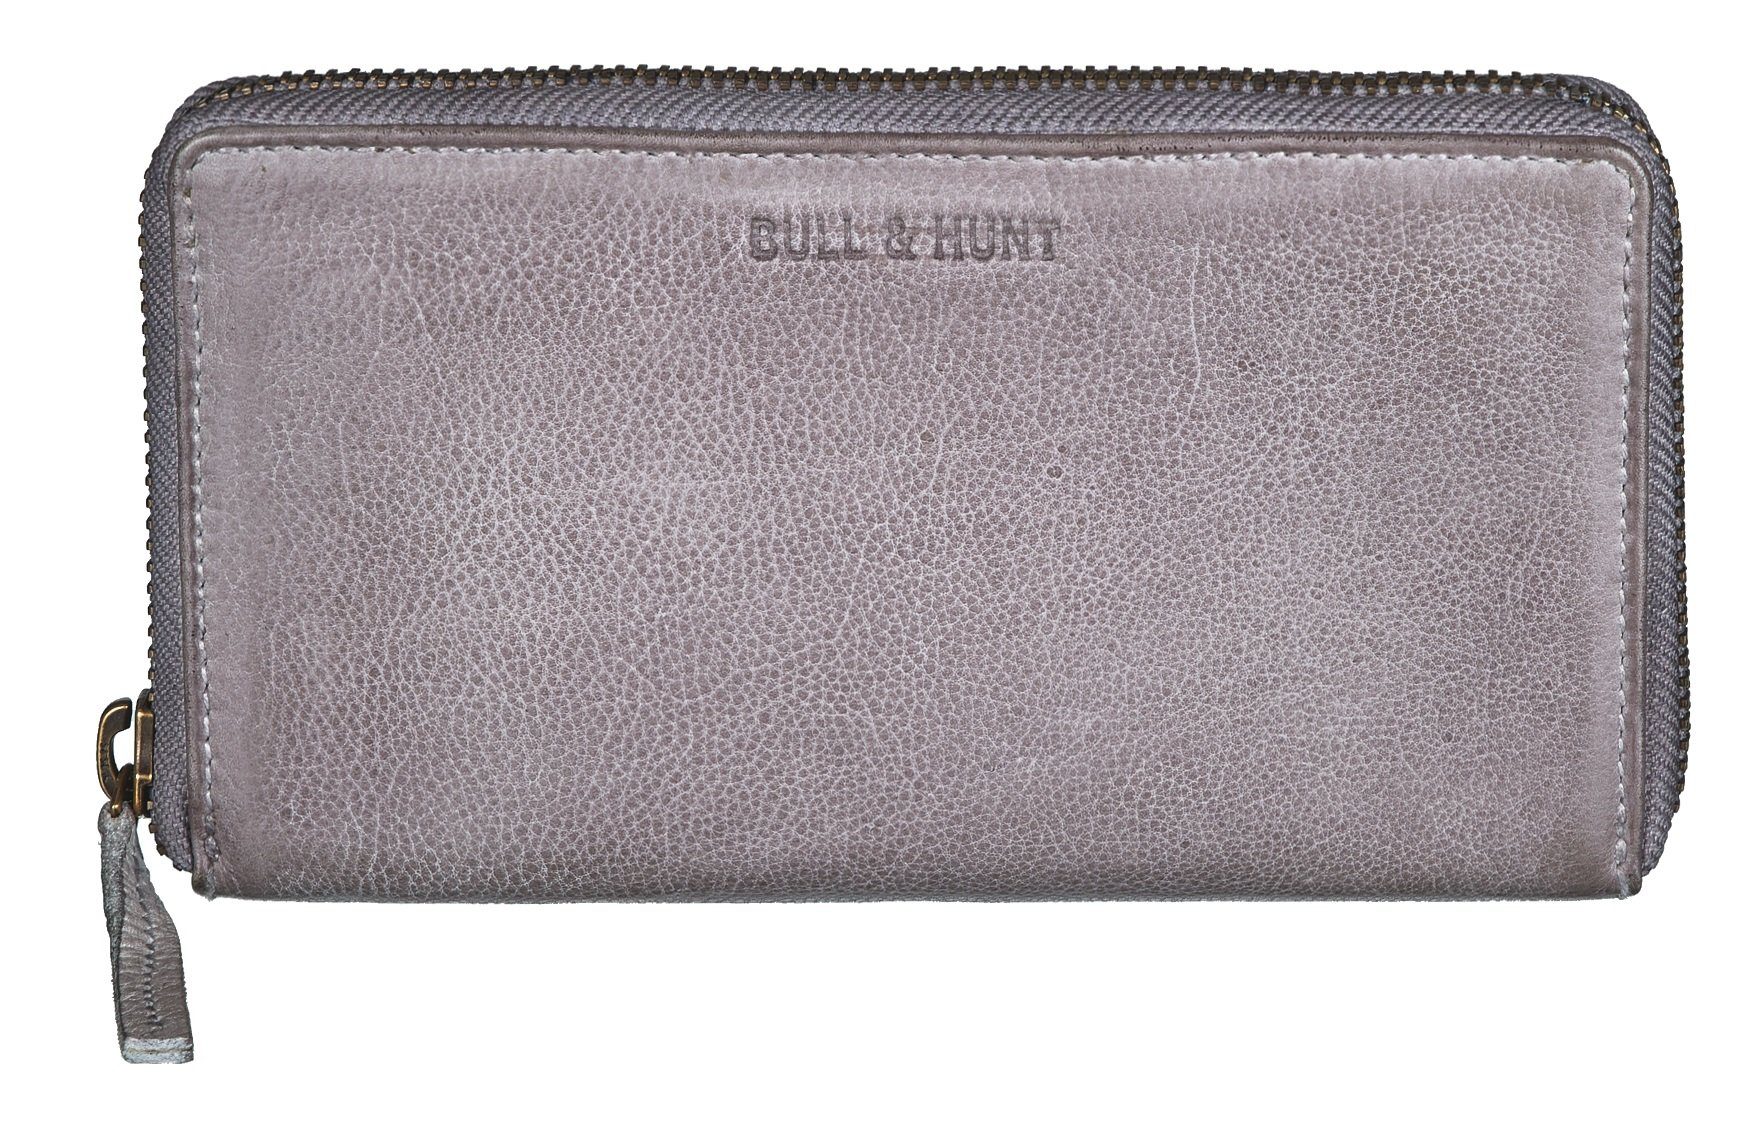 Bull & Hunt zip large steel wallet grey Geldbörse